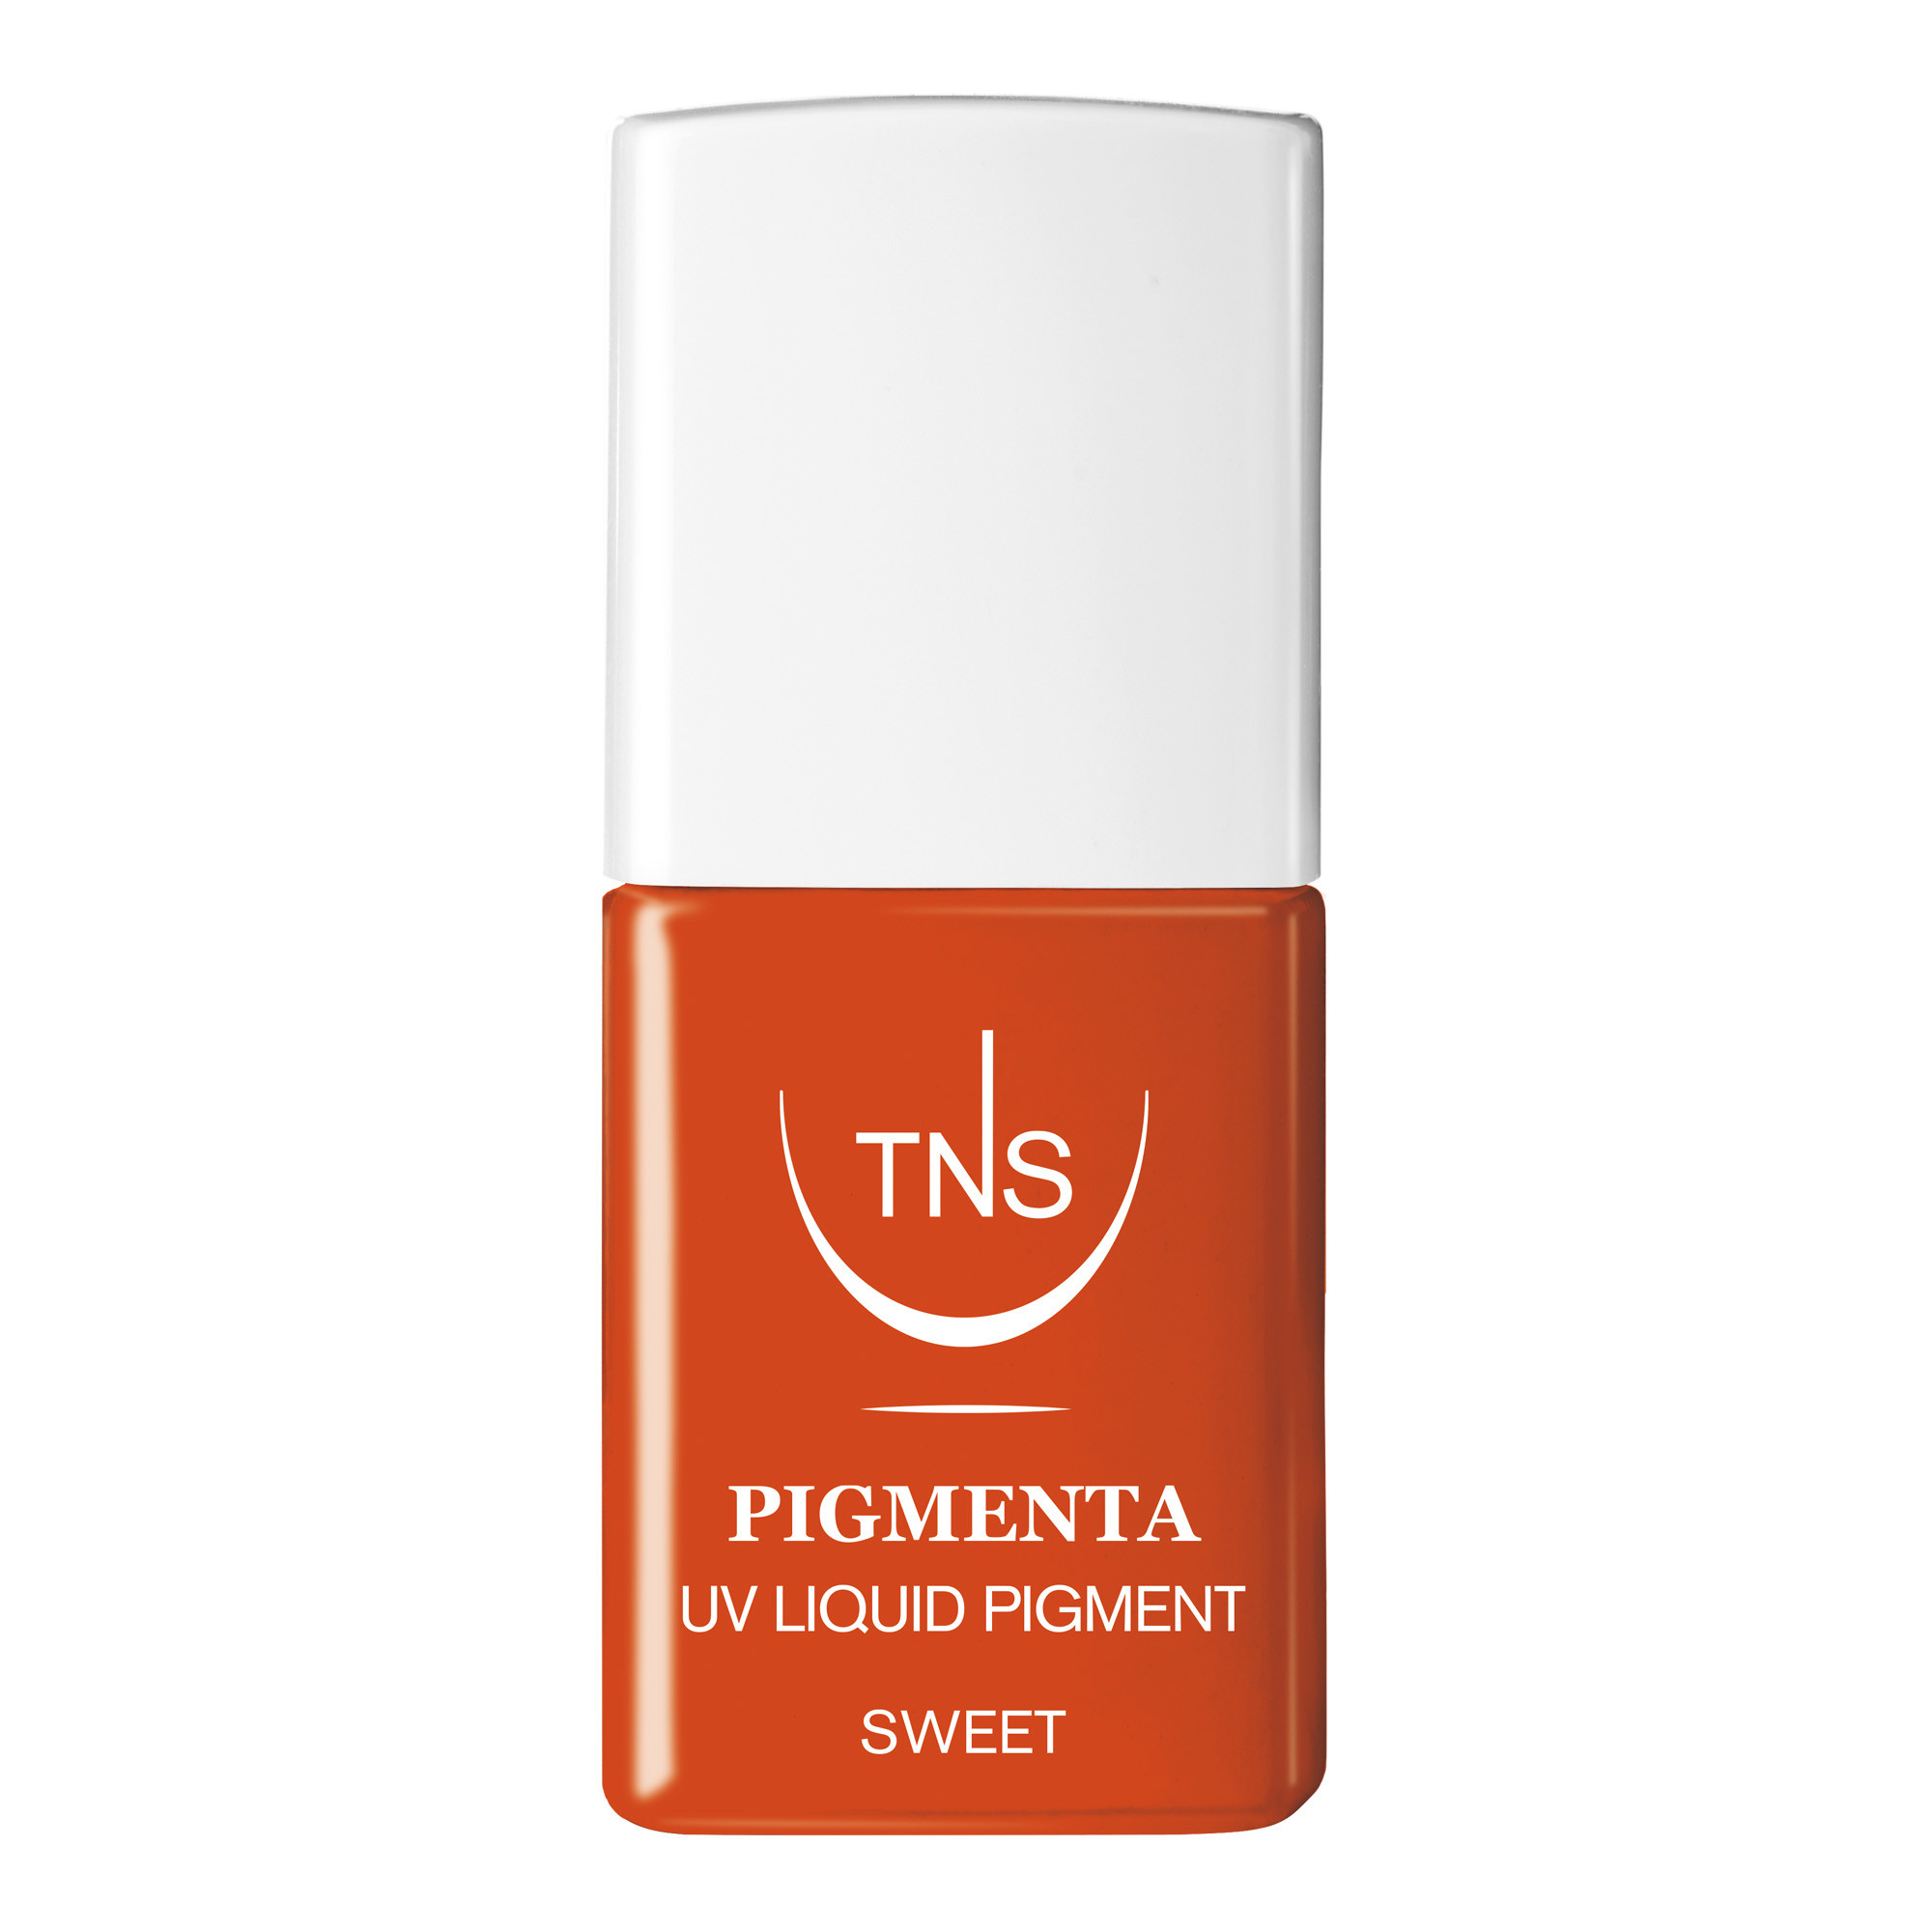 Pigmento Liquido UV Sweet arancio 10 ml Pigmenta TNS